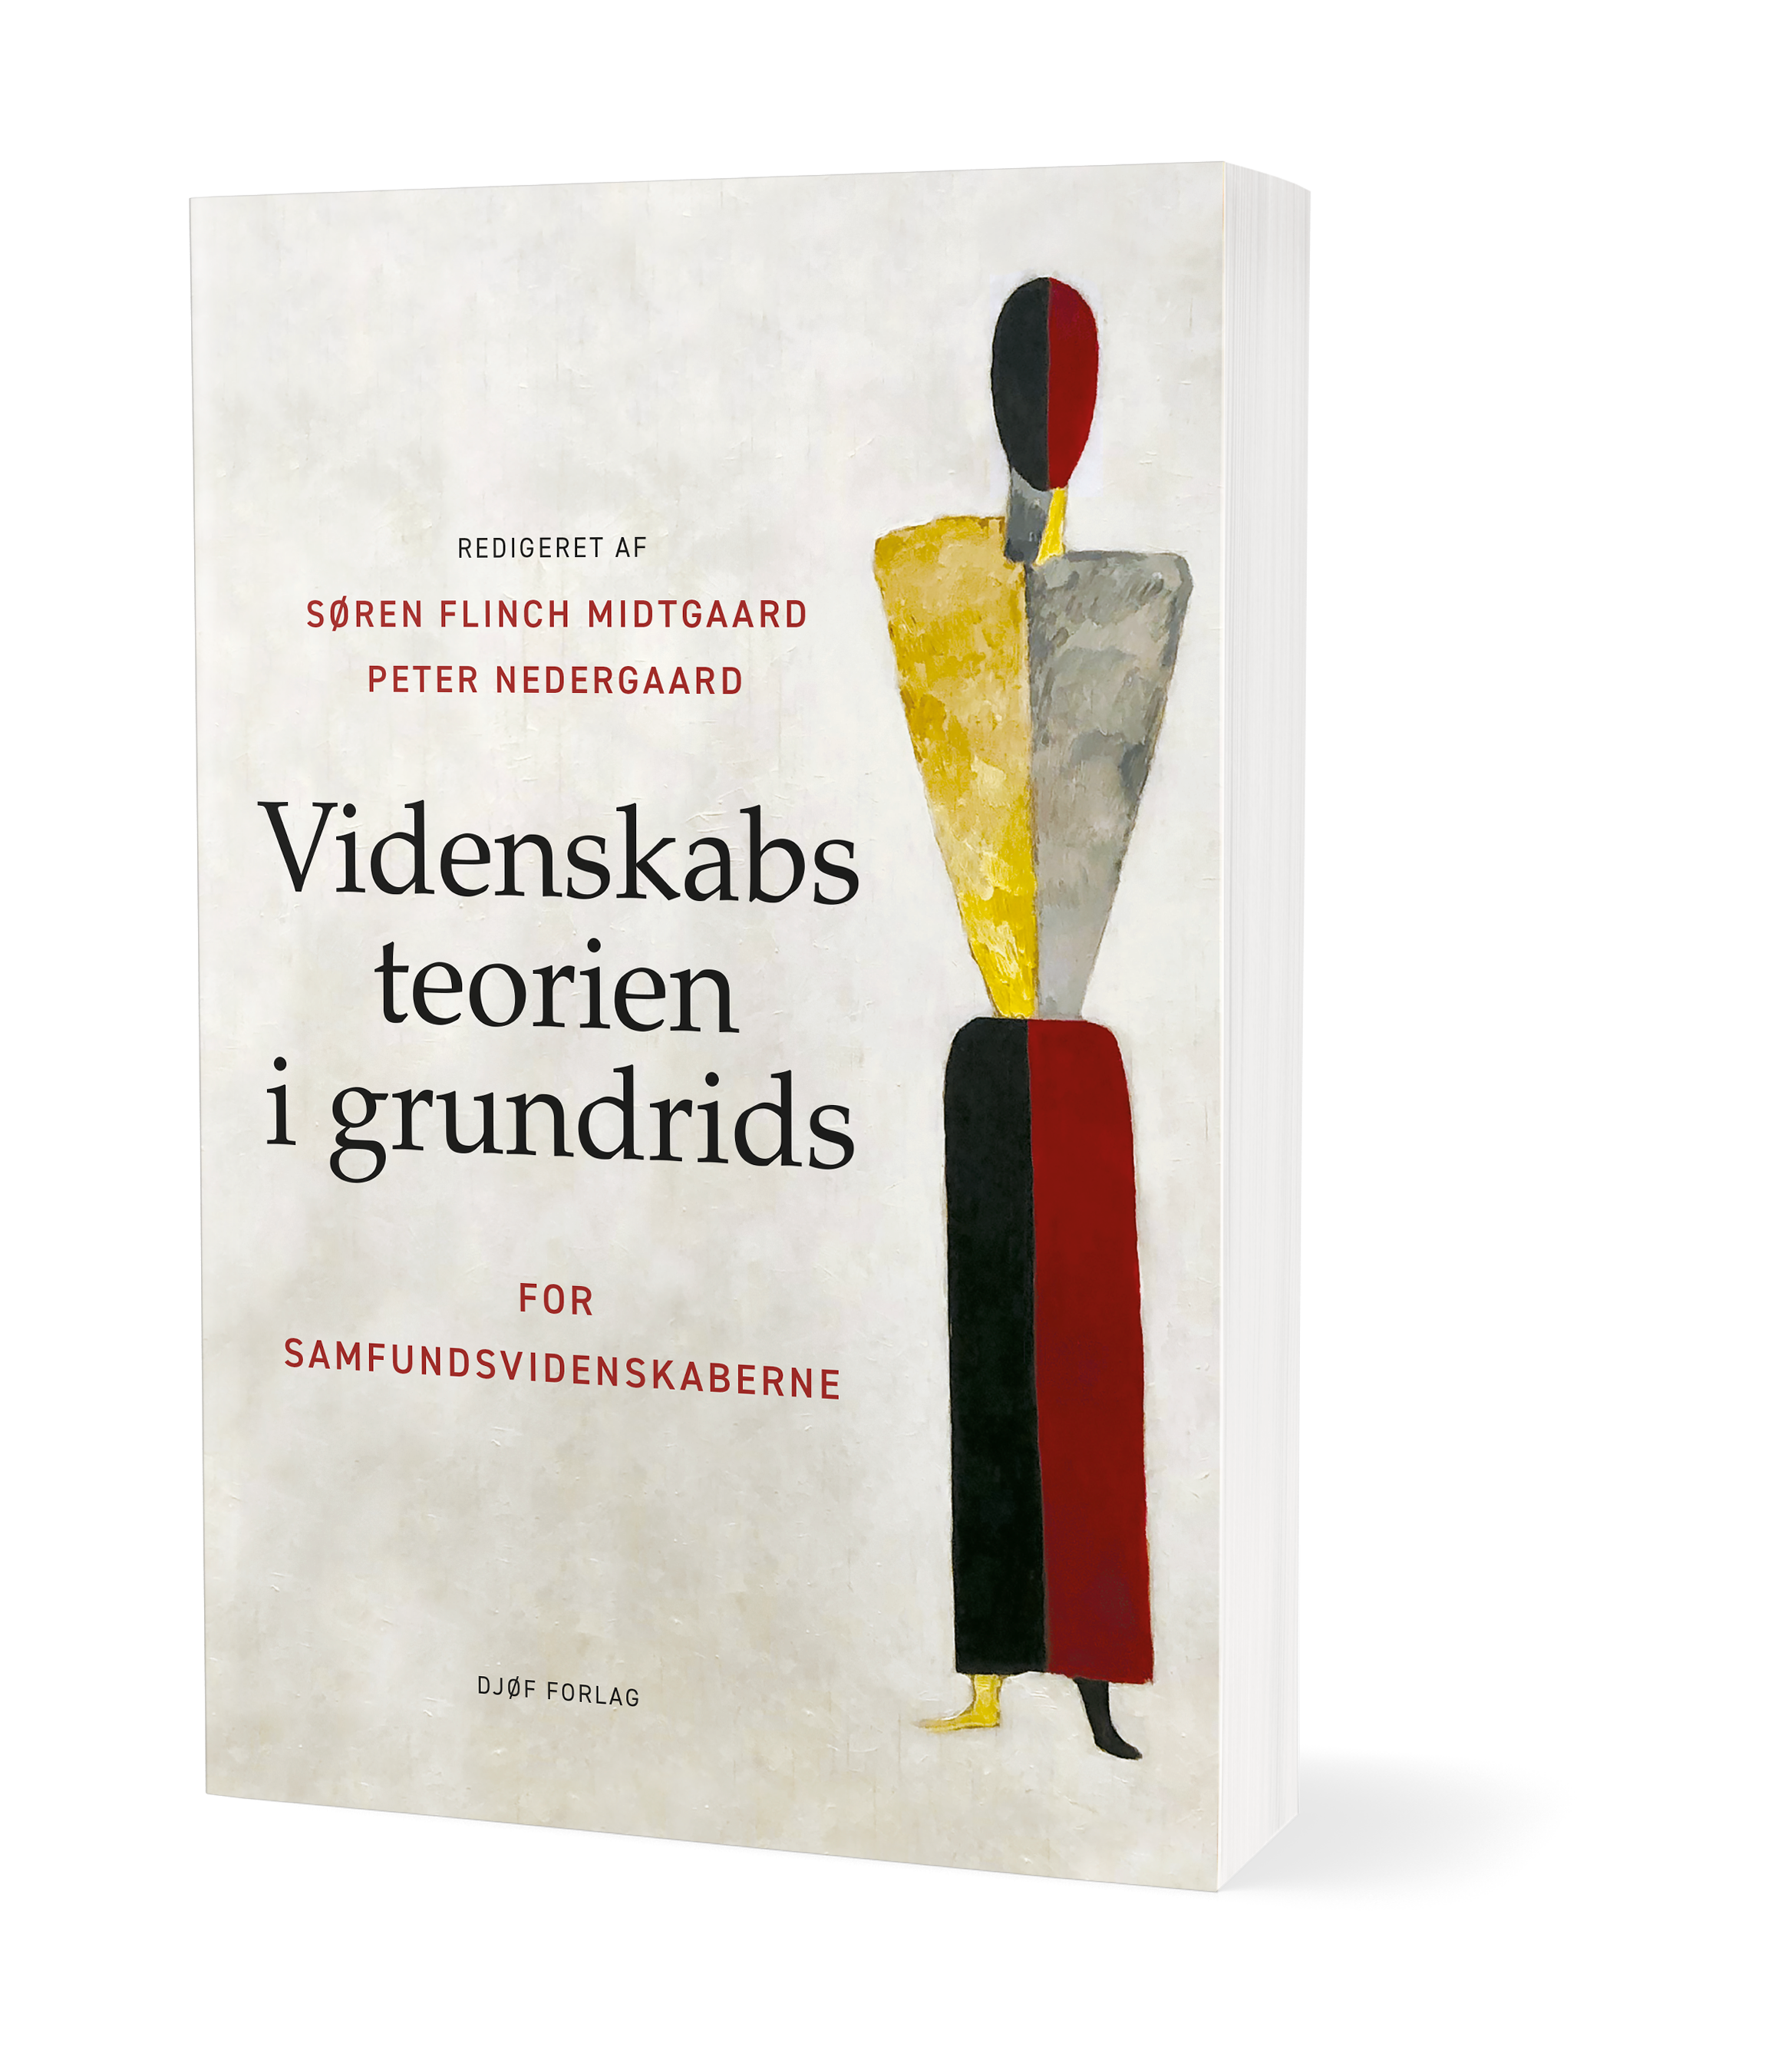 Book cover with figurative person for the book 'Videnskabsteori i grundrids'.